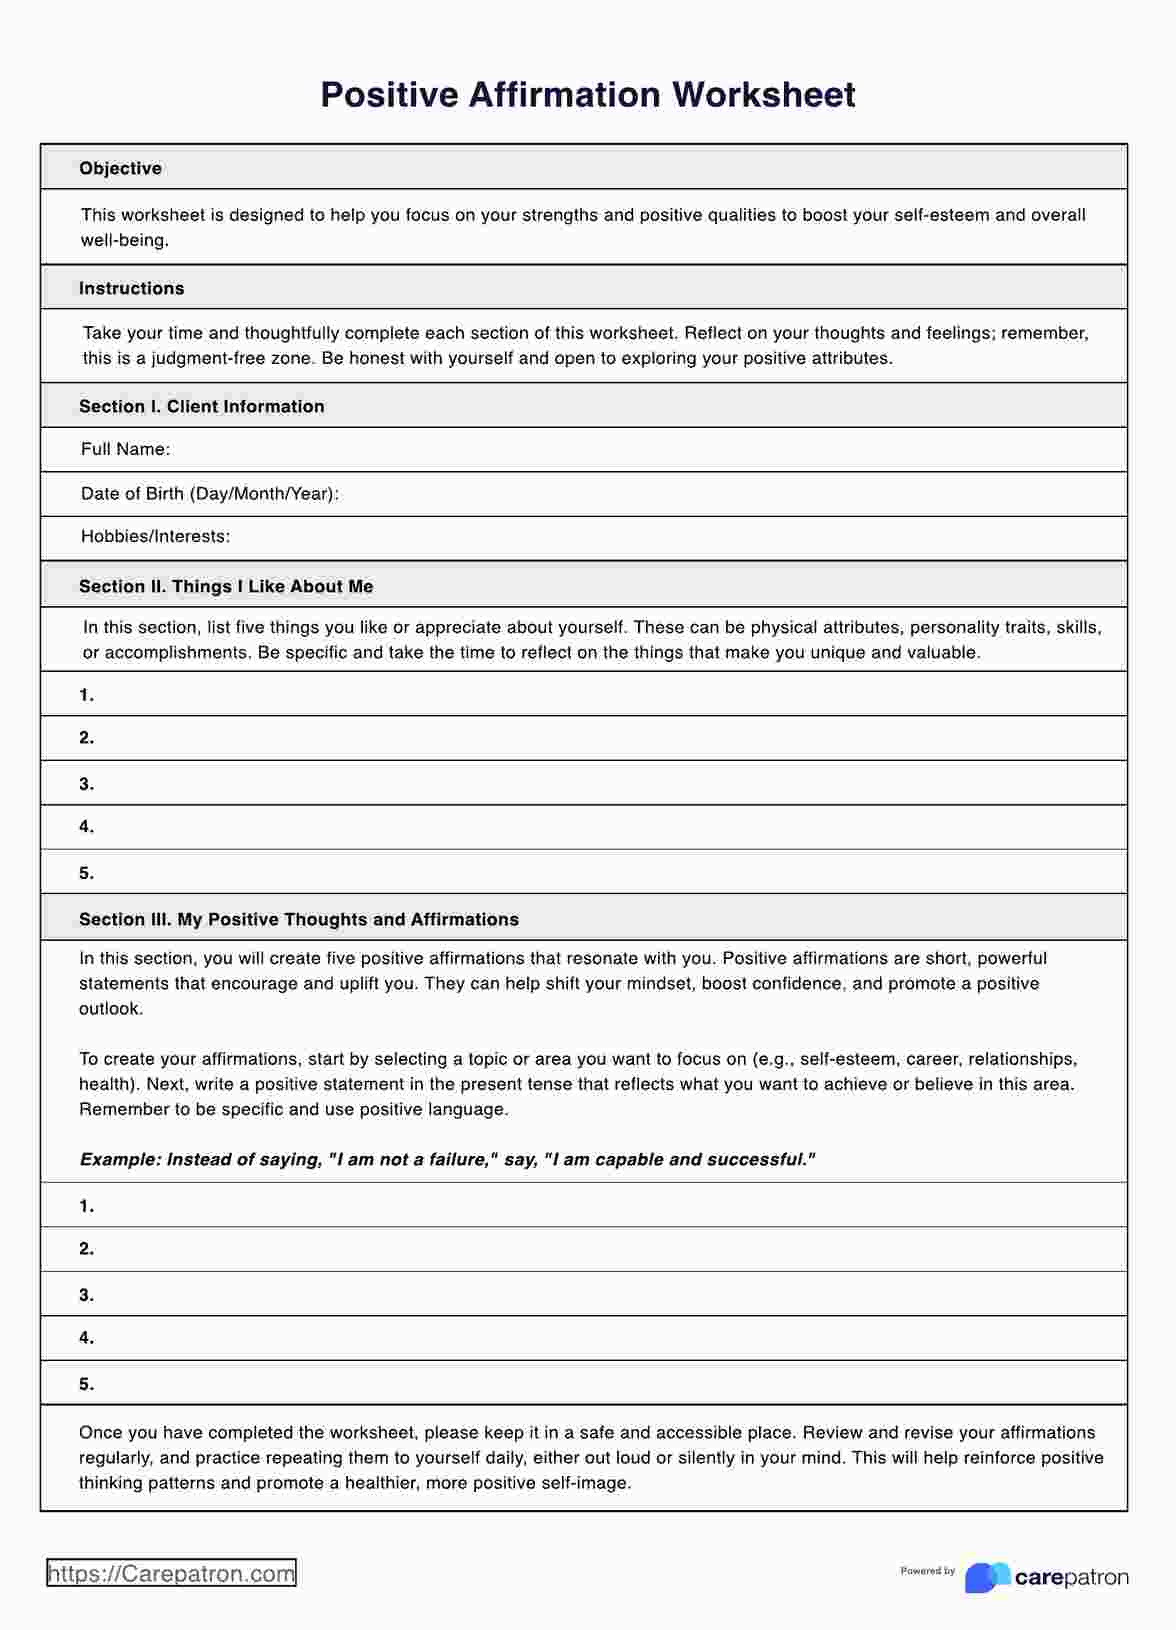 Positive Affirmations Worksheet PDF Example